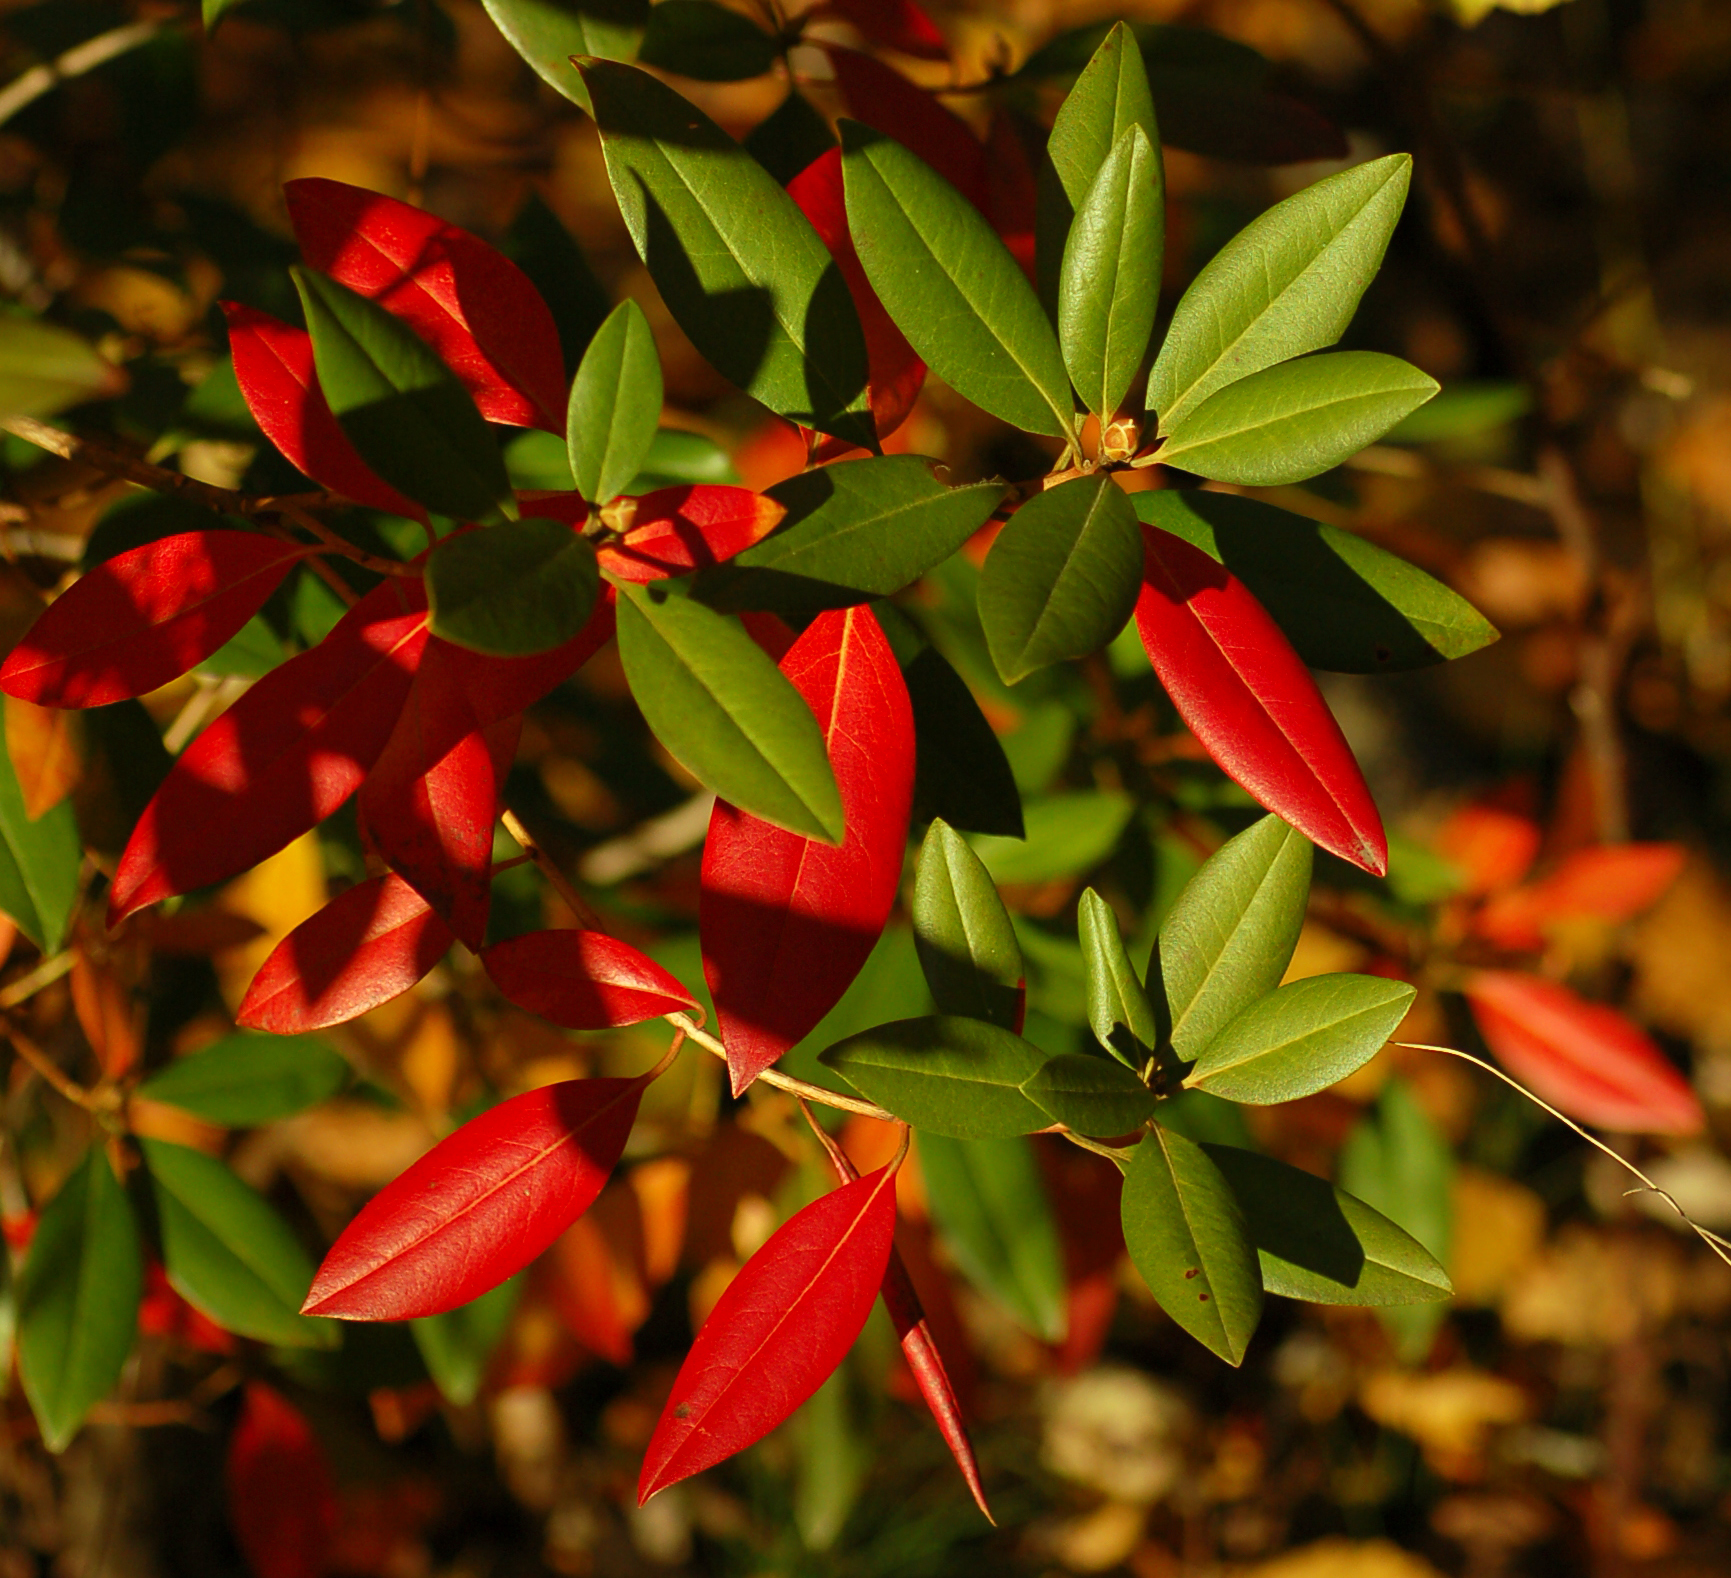 'Conewago Improved' Autumn Leaves 1731px.jpg - Wikimedia